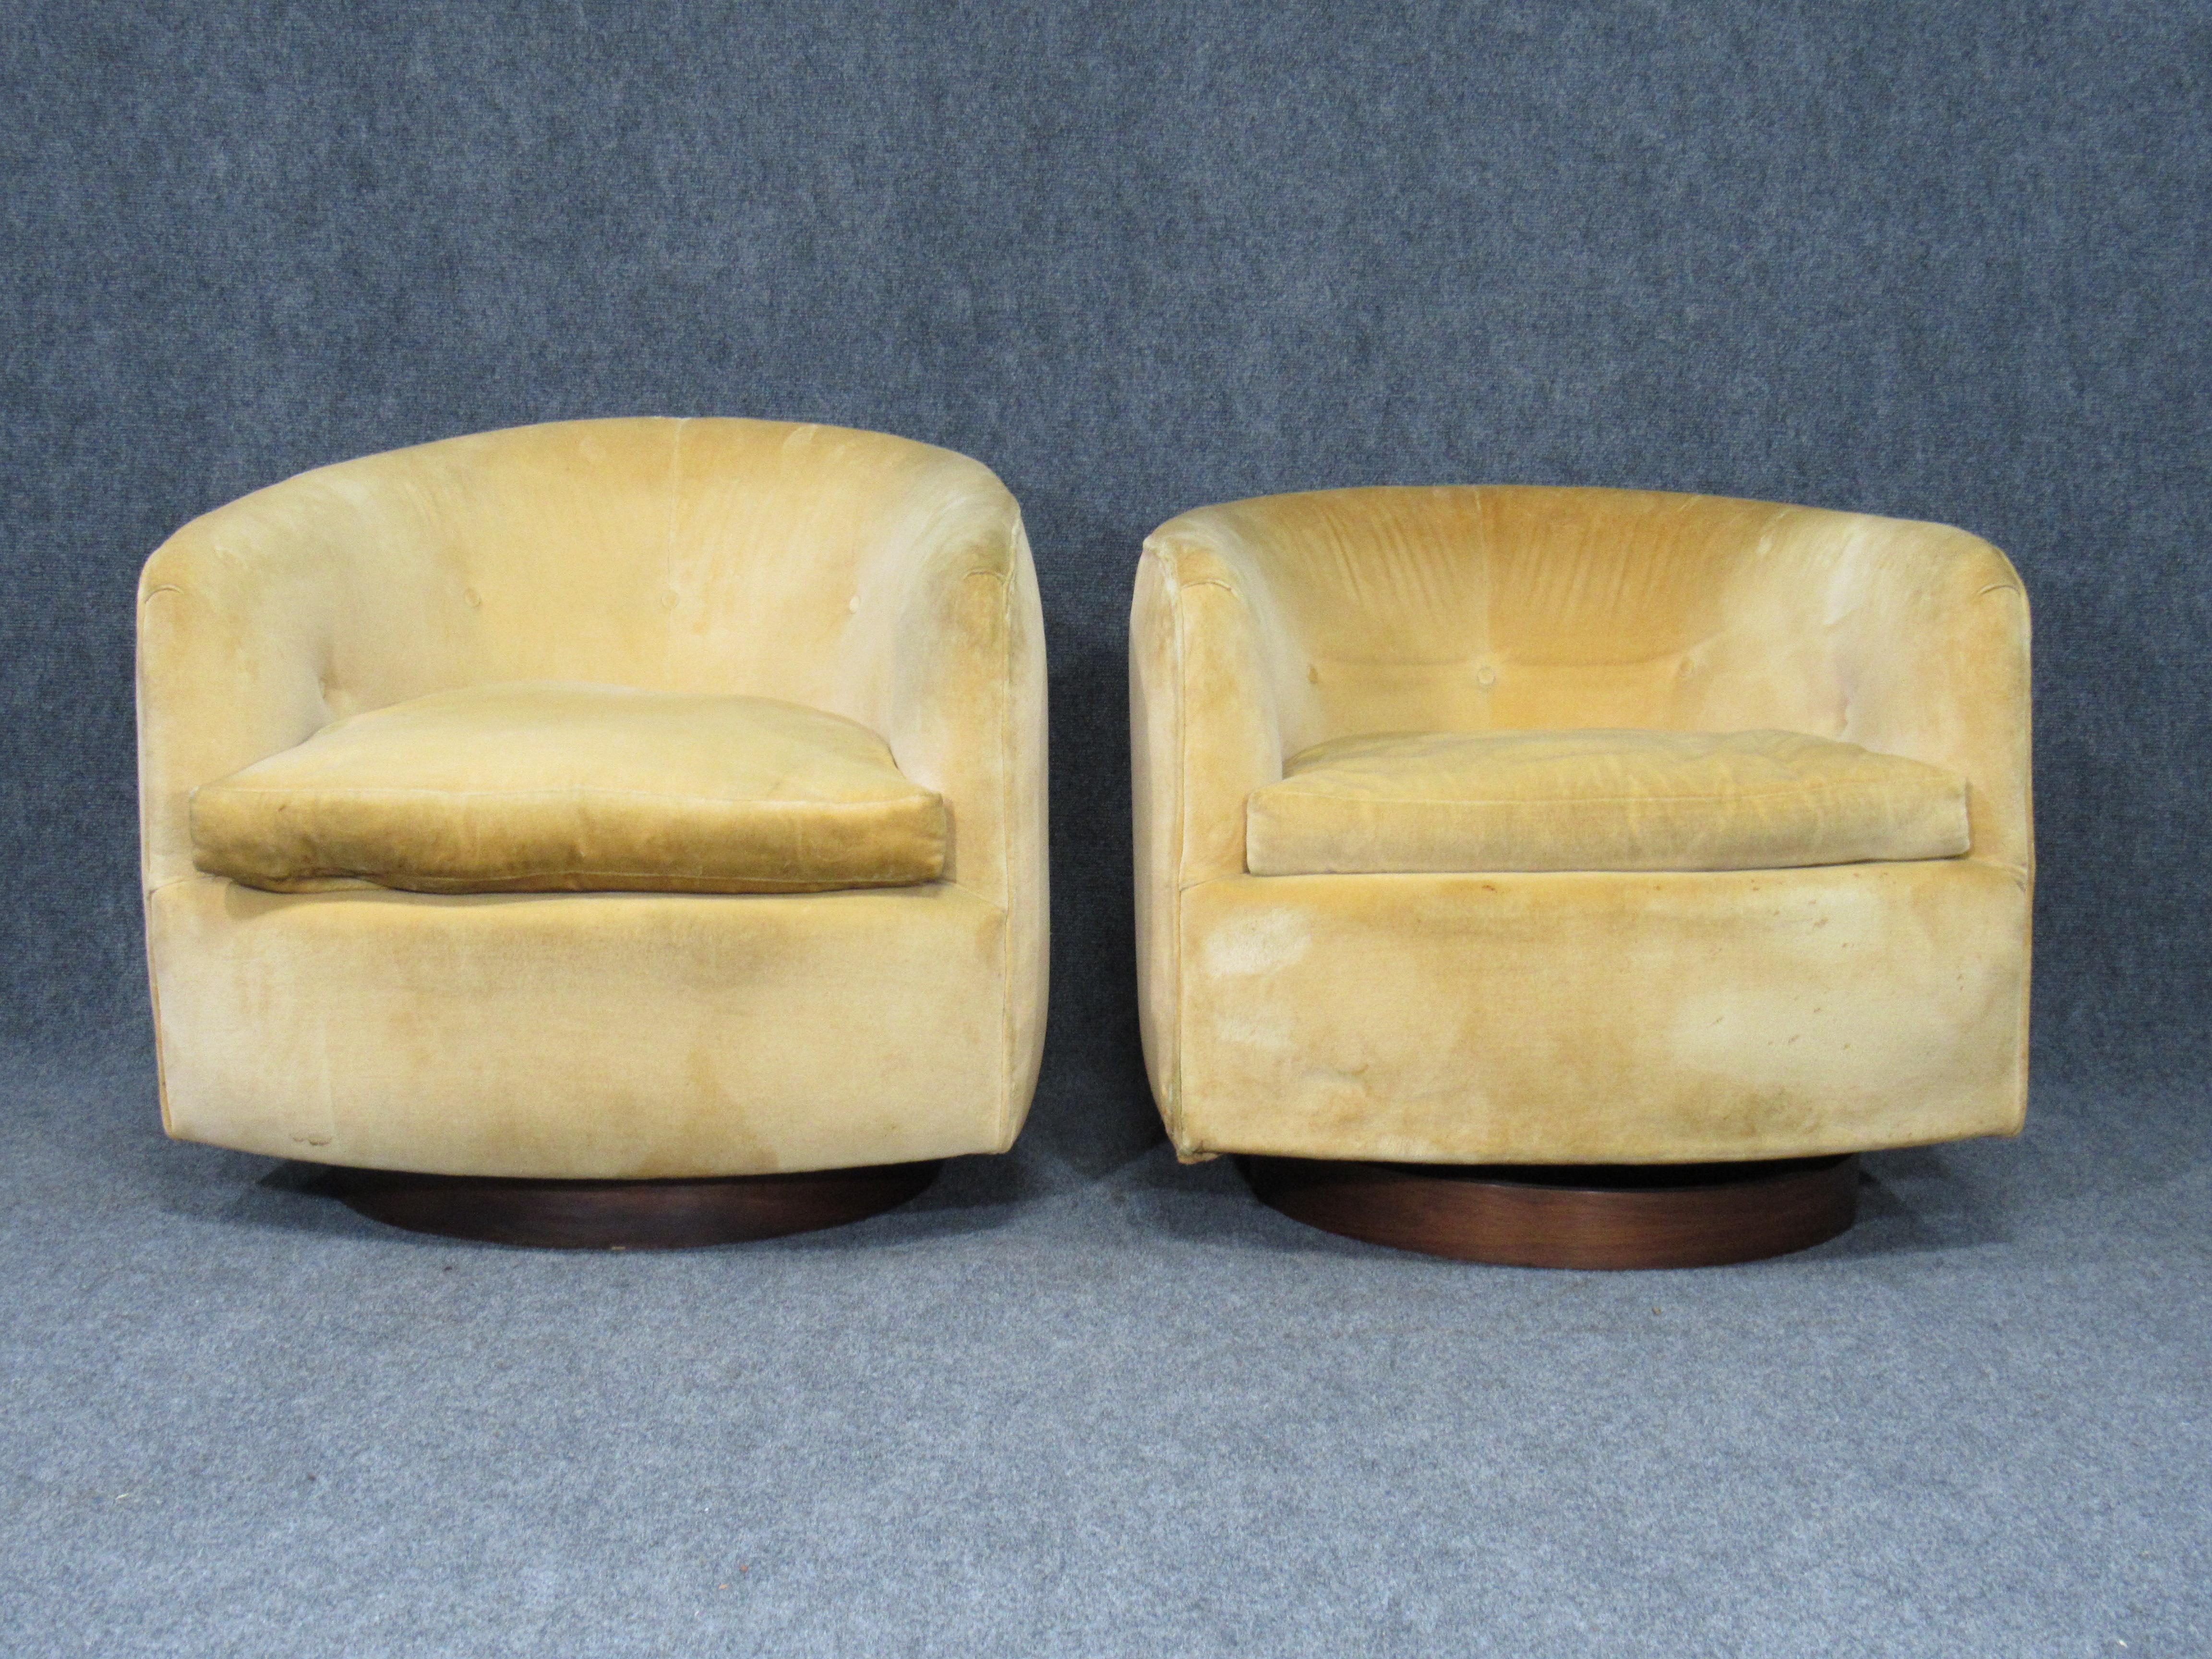 Pair of Danish modern Milo Baughman style swivel club chairs with teak bases. Upholstered in original gold velvet fabric.